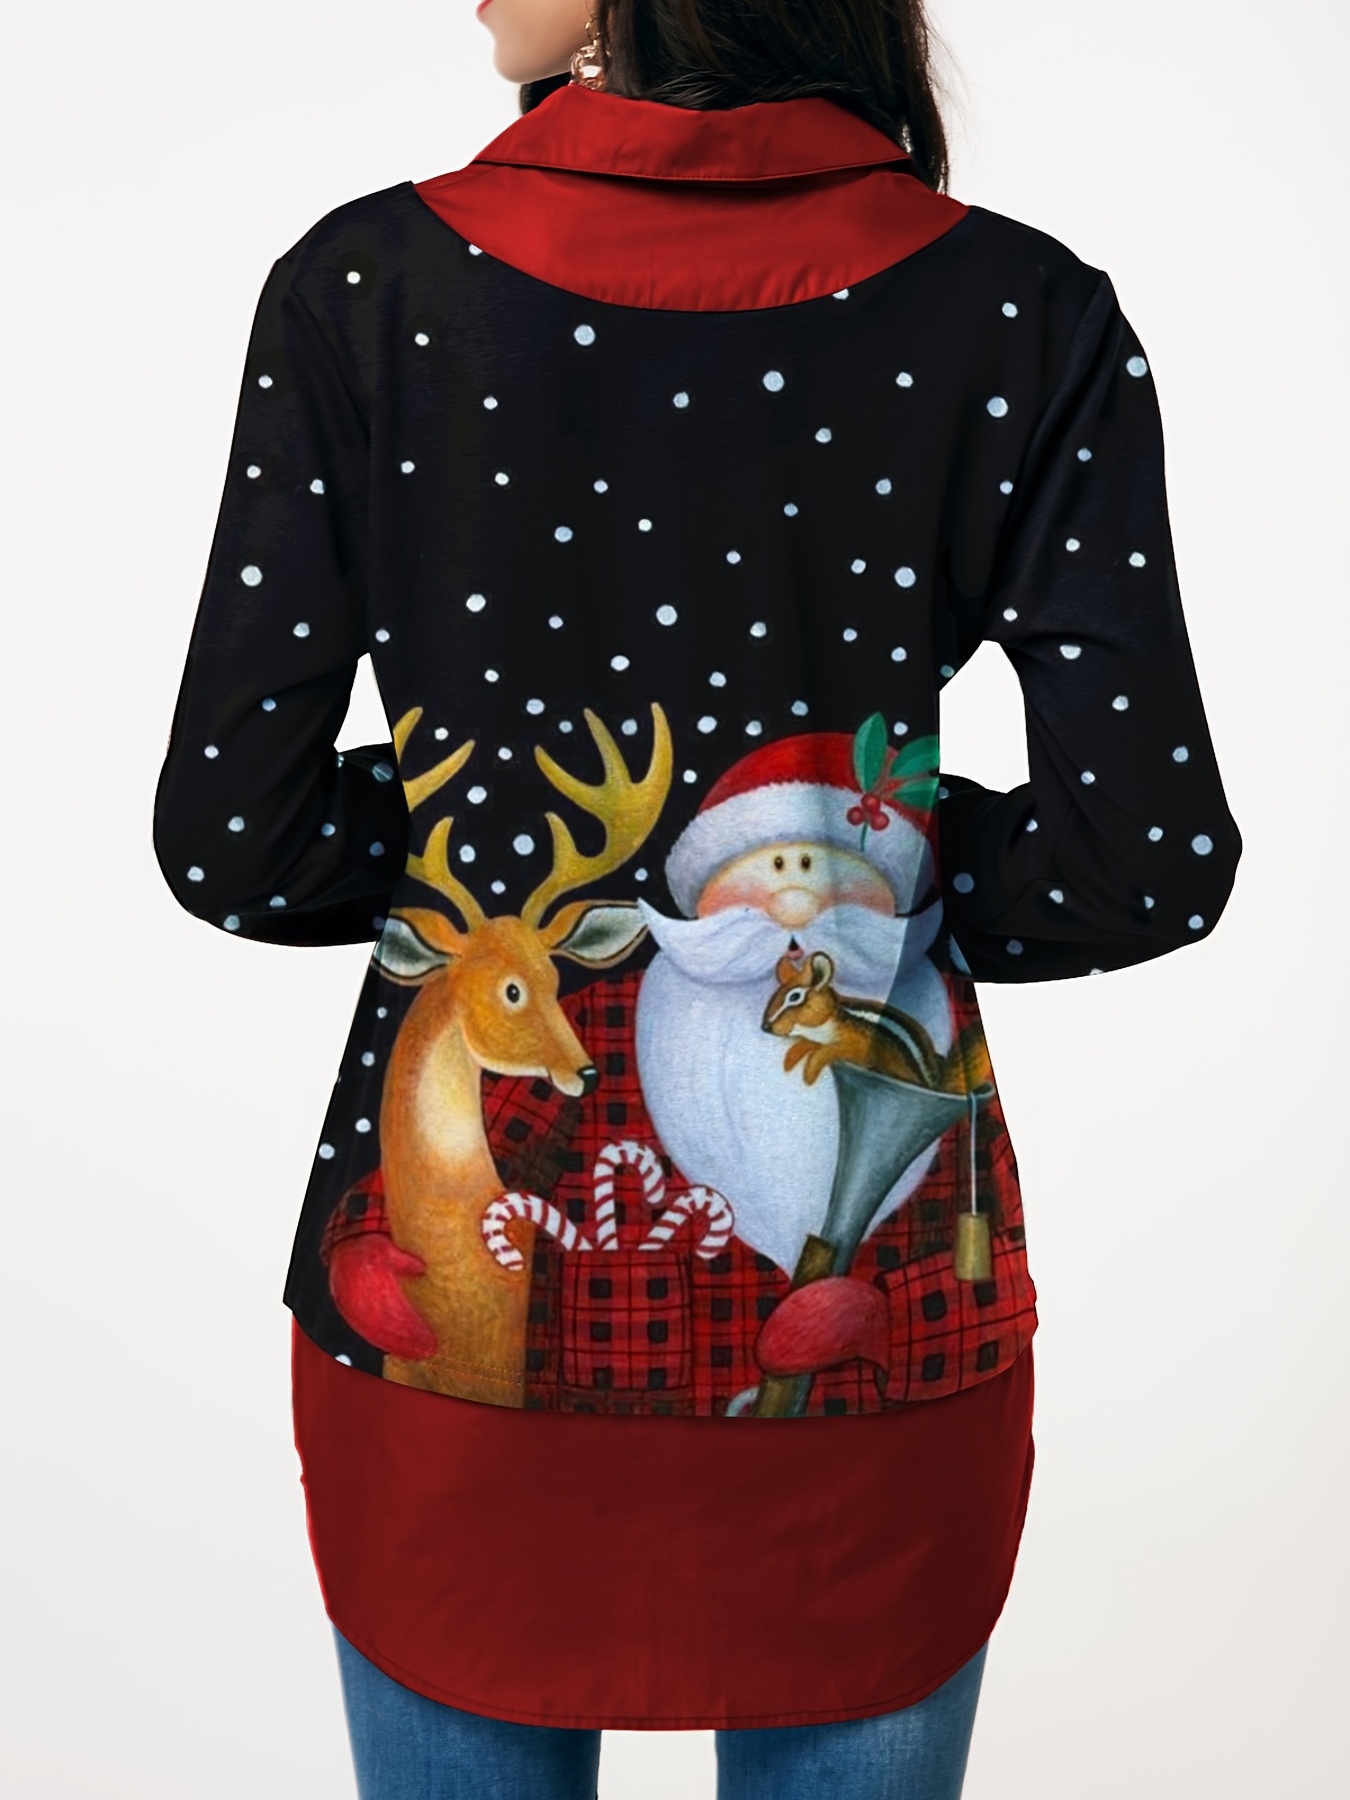 Best Deal for IHGFTRTH Christmas Women And Men Long Sleeve Deer Printed